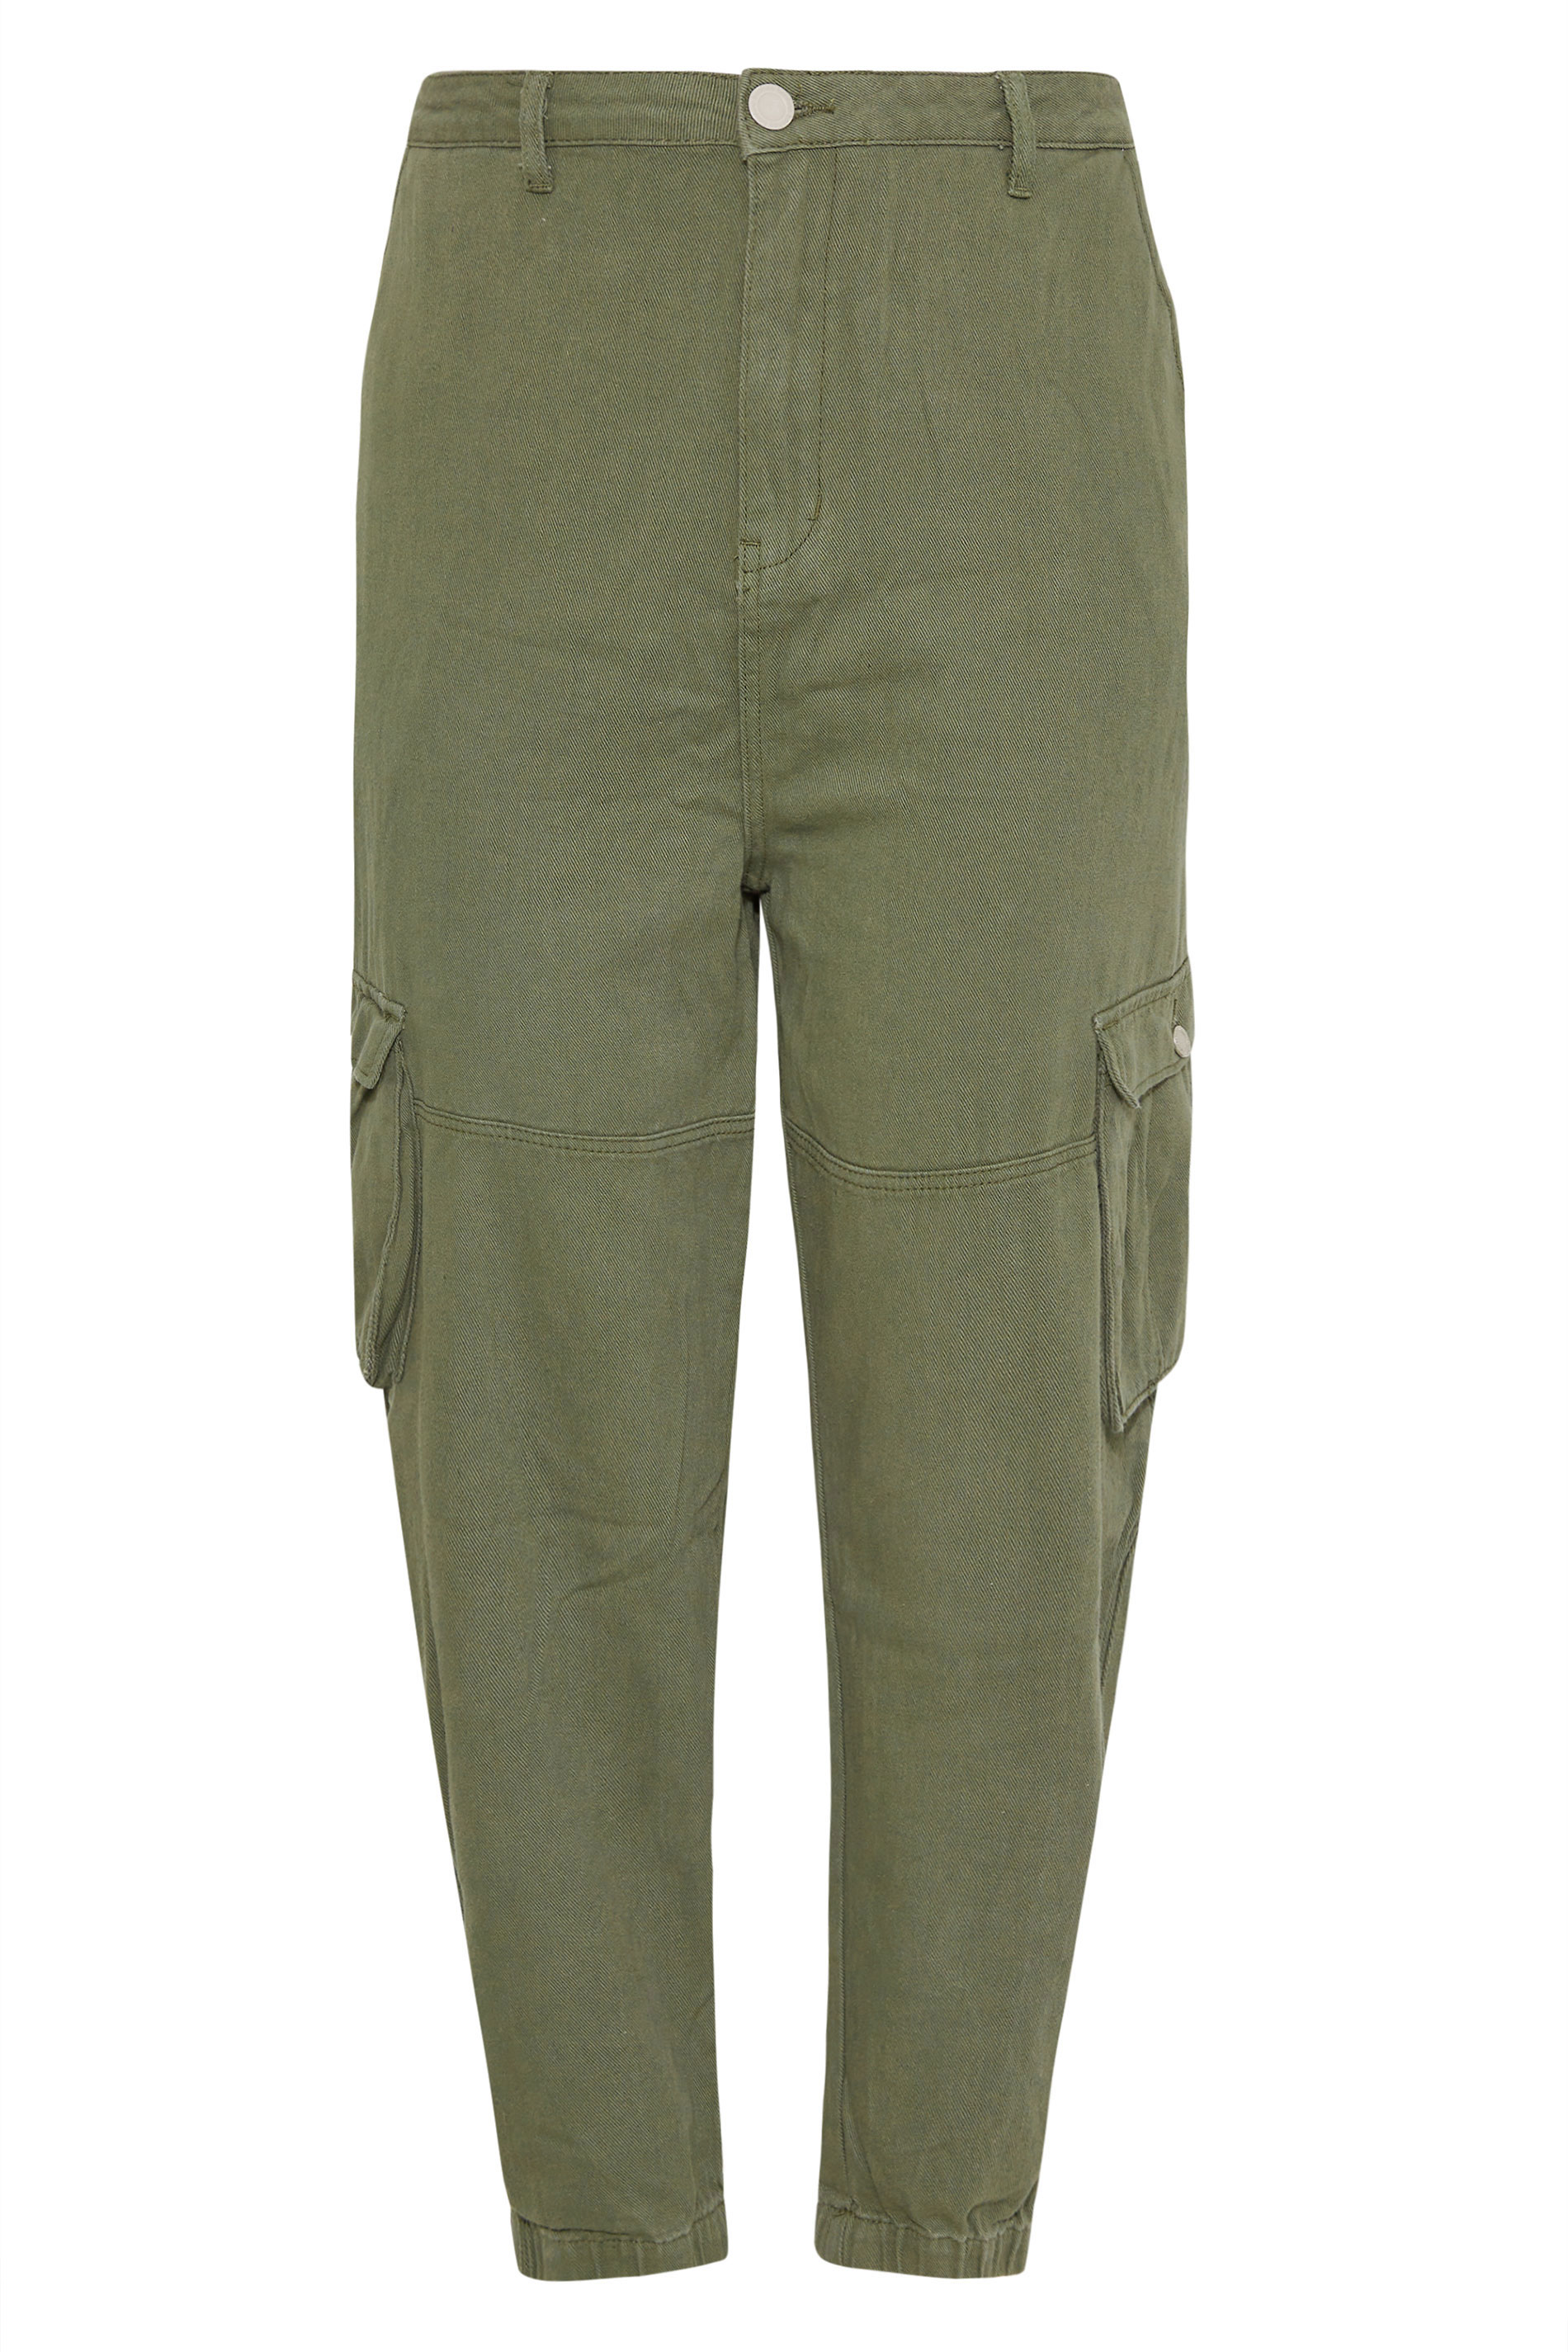 Plus Size Khaki Green Cargo Pocket Jeans | Yours Clothing